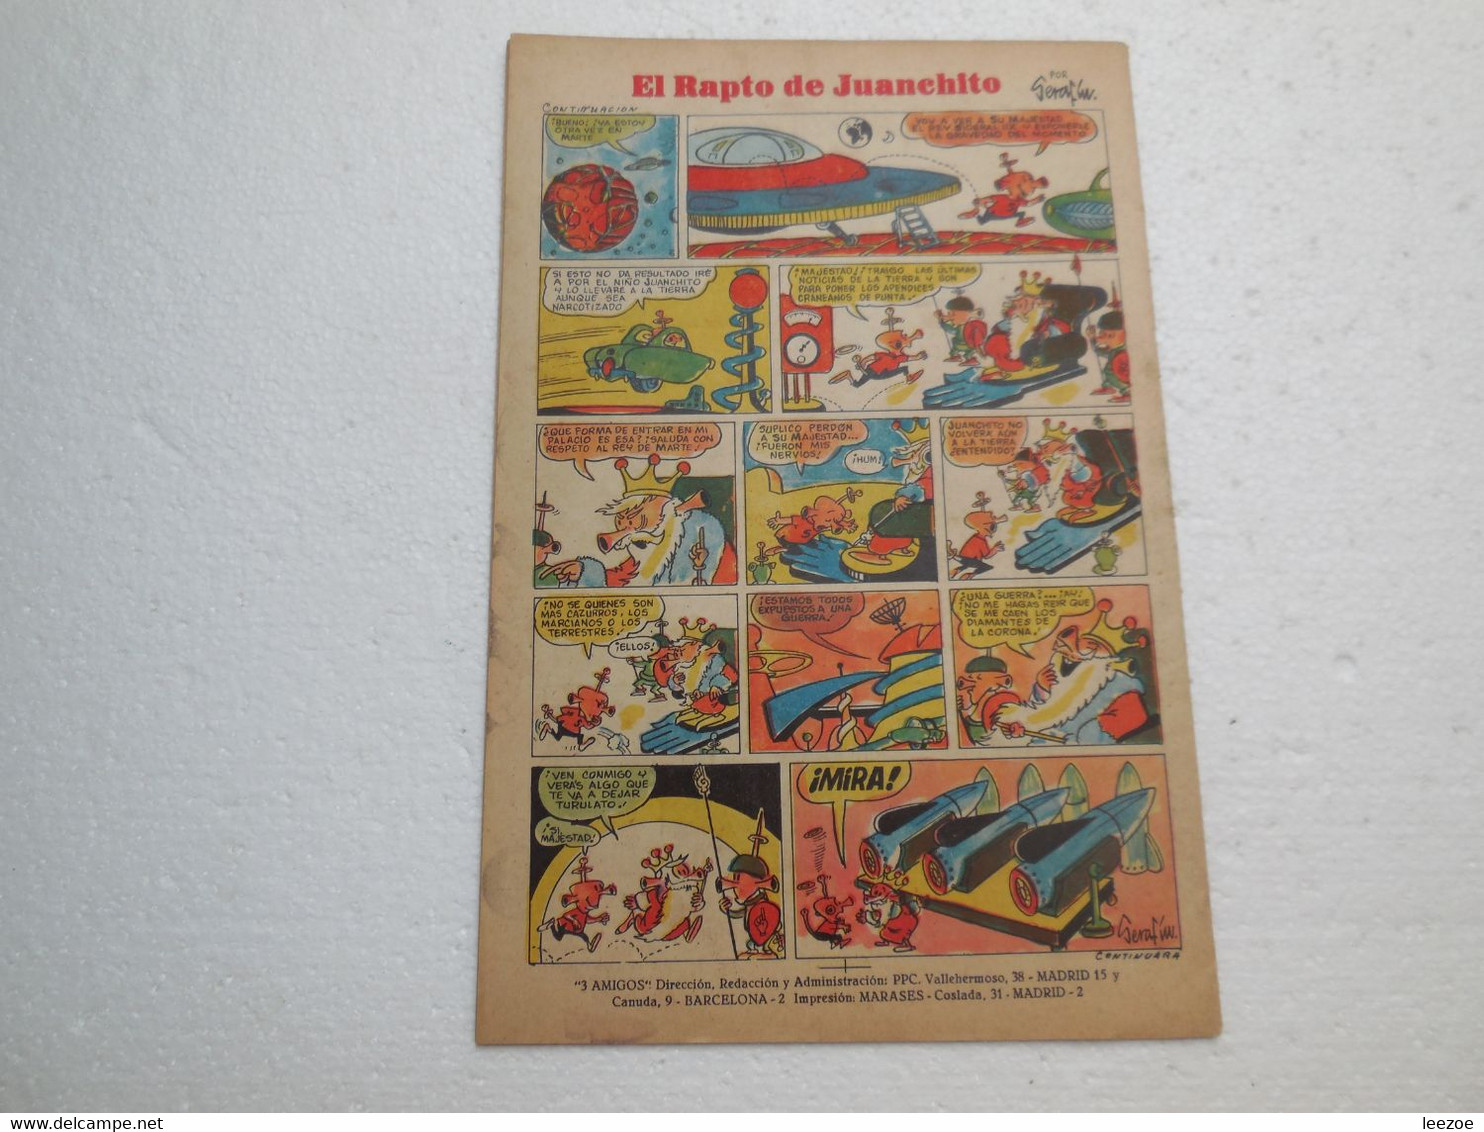 BD 3 AMIGOS 1960 AVEC TINTIN EN ESPAGNOL, Passage De Rackham Le Rouge.....N5.04.02 - Tintin